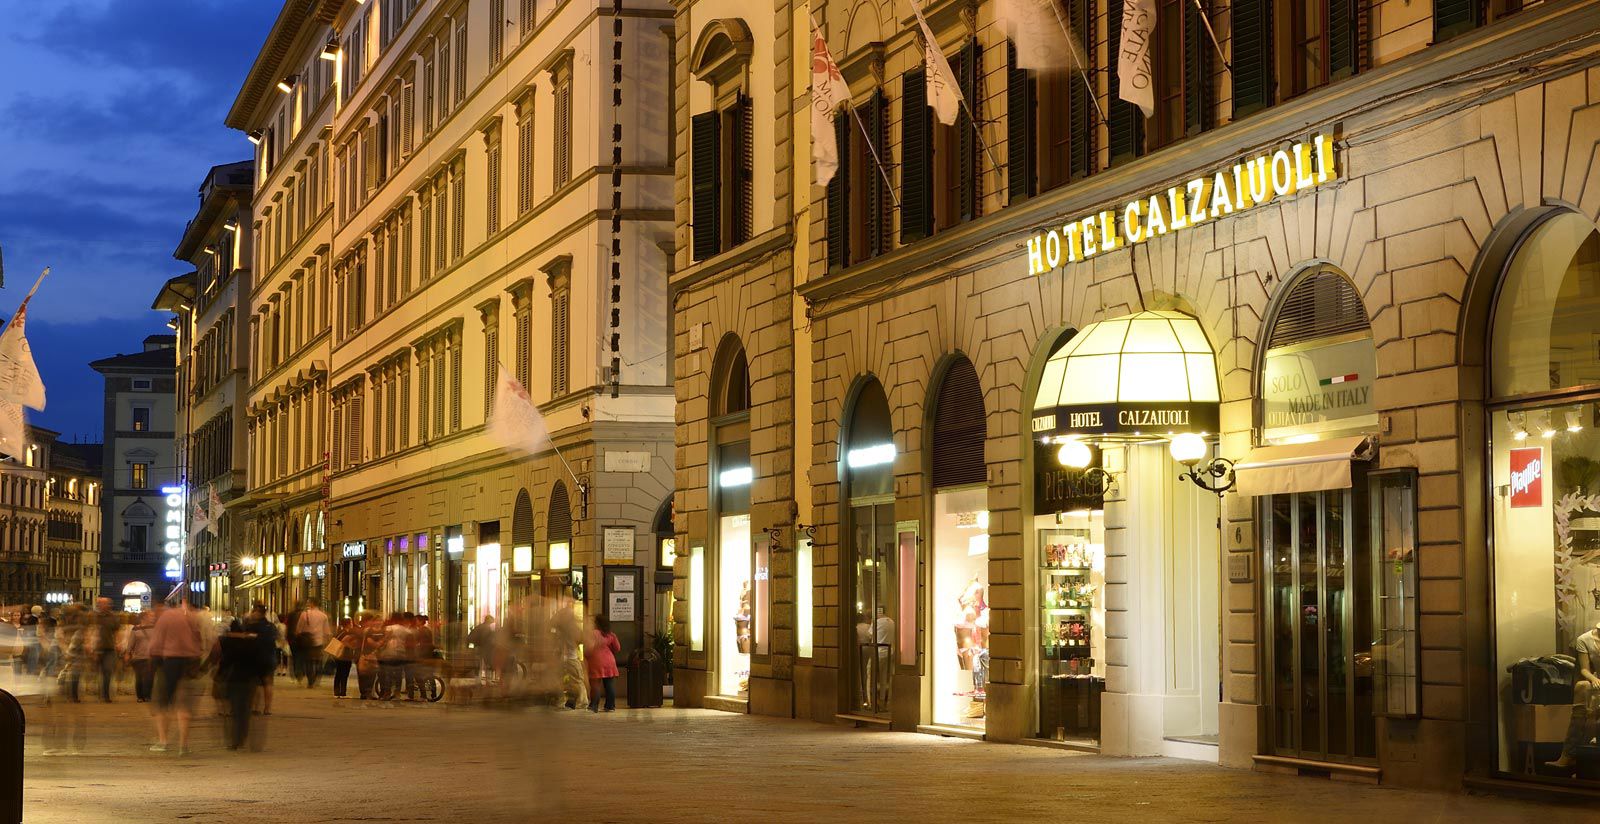 Hotel Calzaiuoli - 4 Star Hotel Florence near Duomo  6